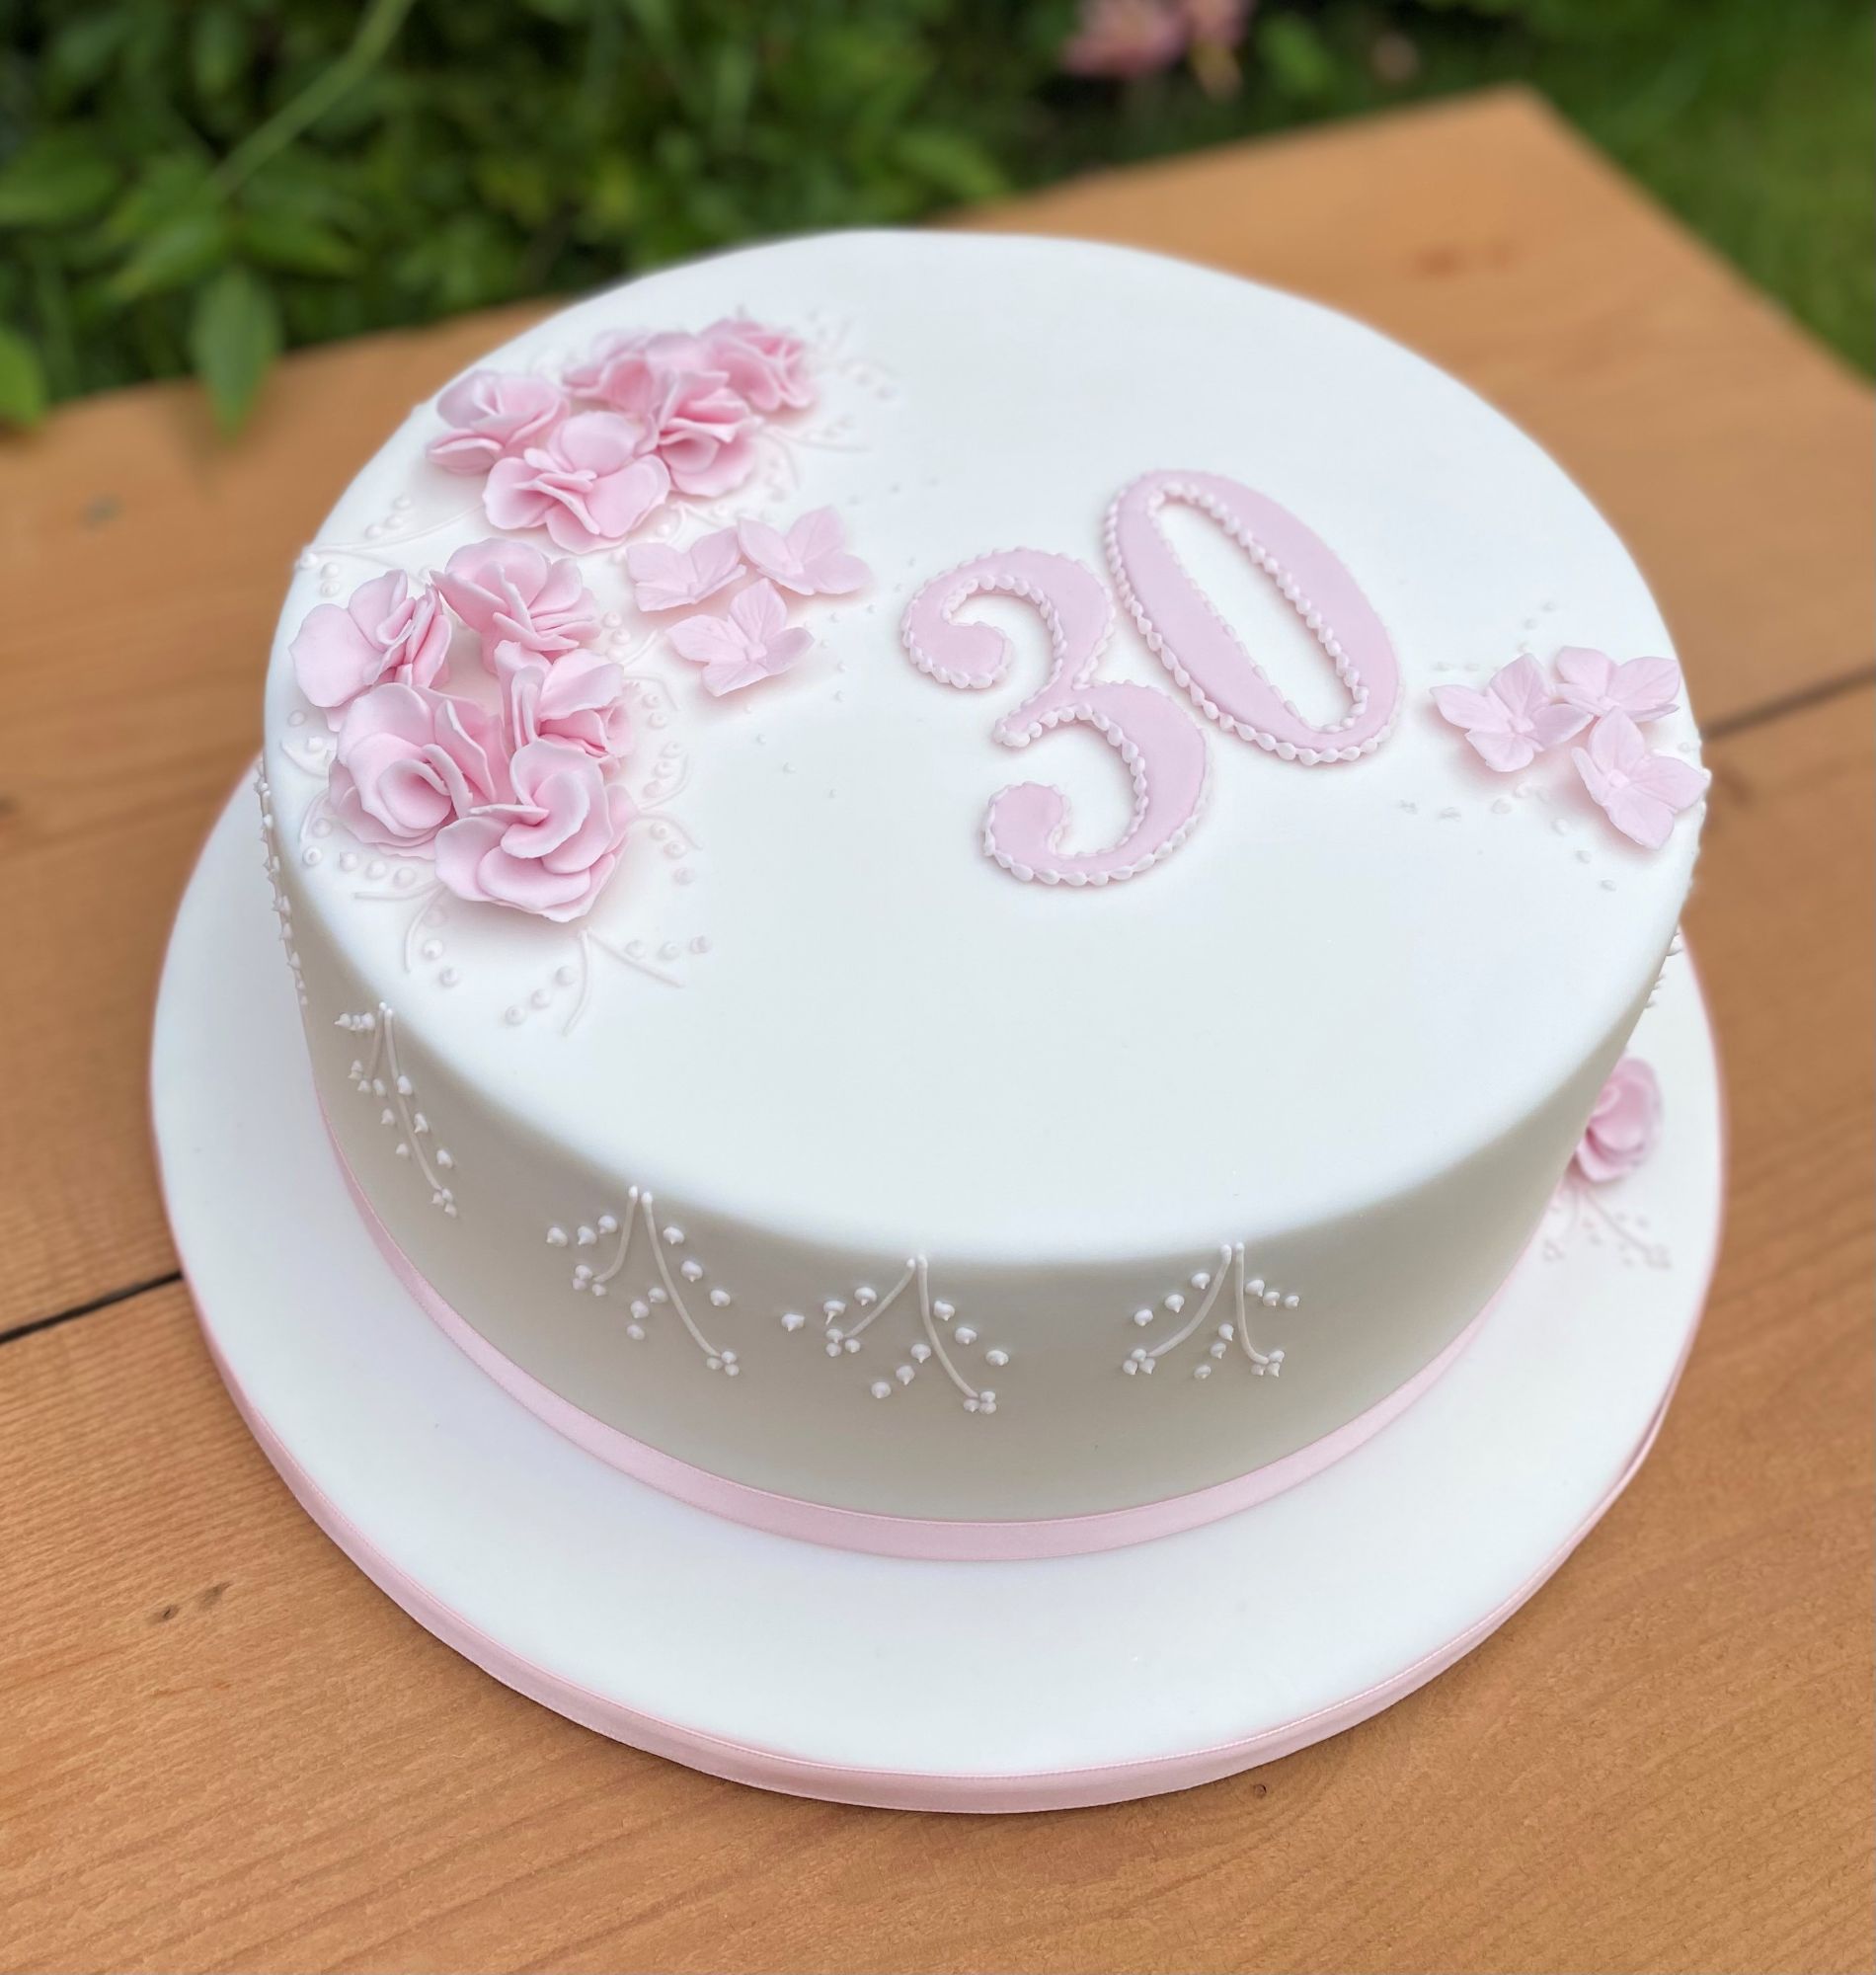 Helen Jane Cake Design, Christchurch, Dorset - celebration cakes (13)